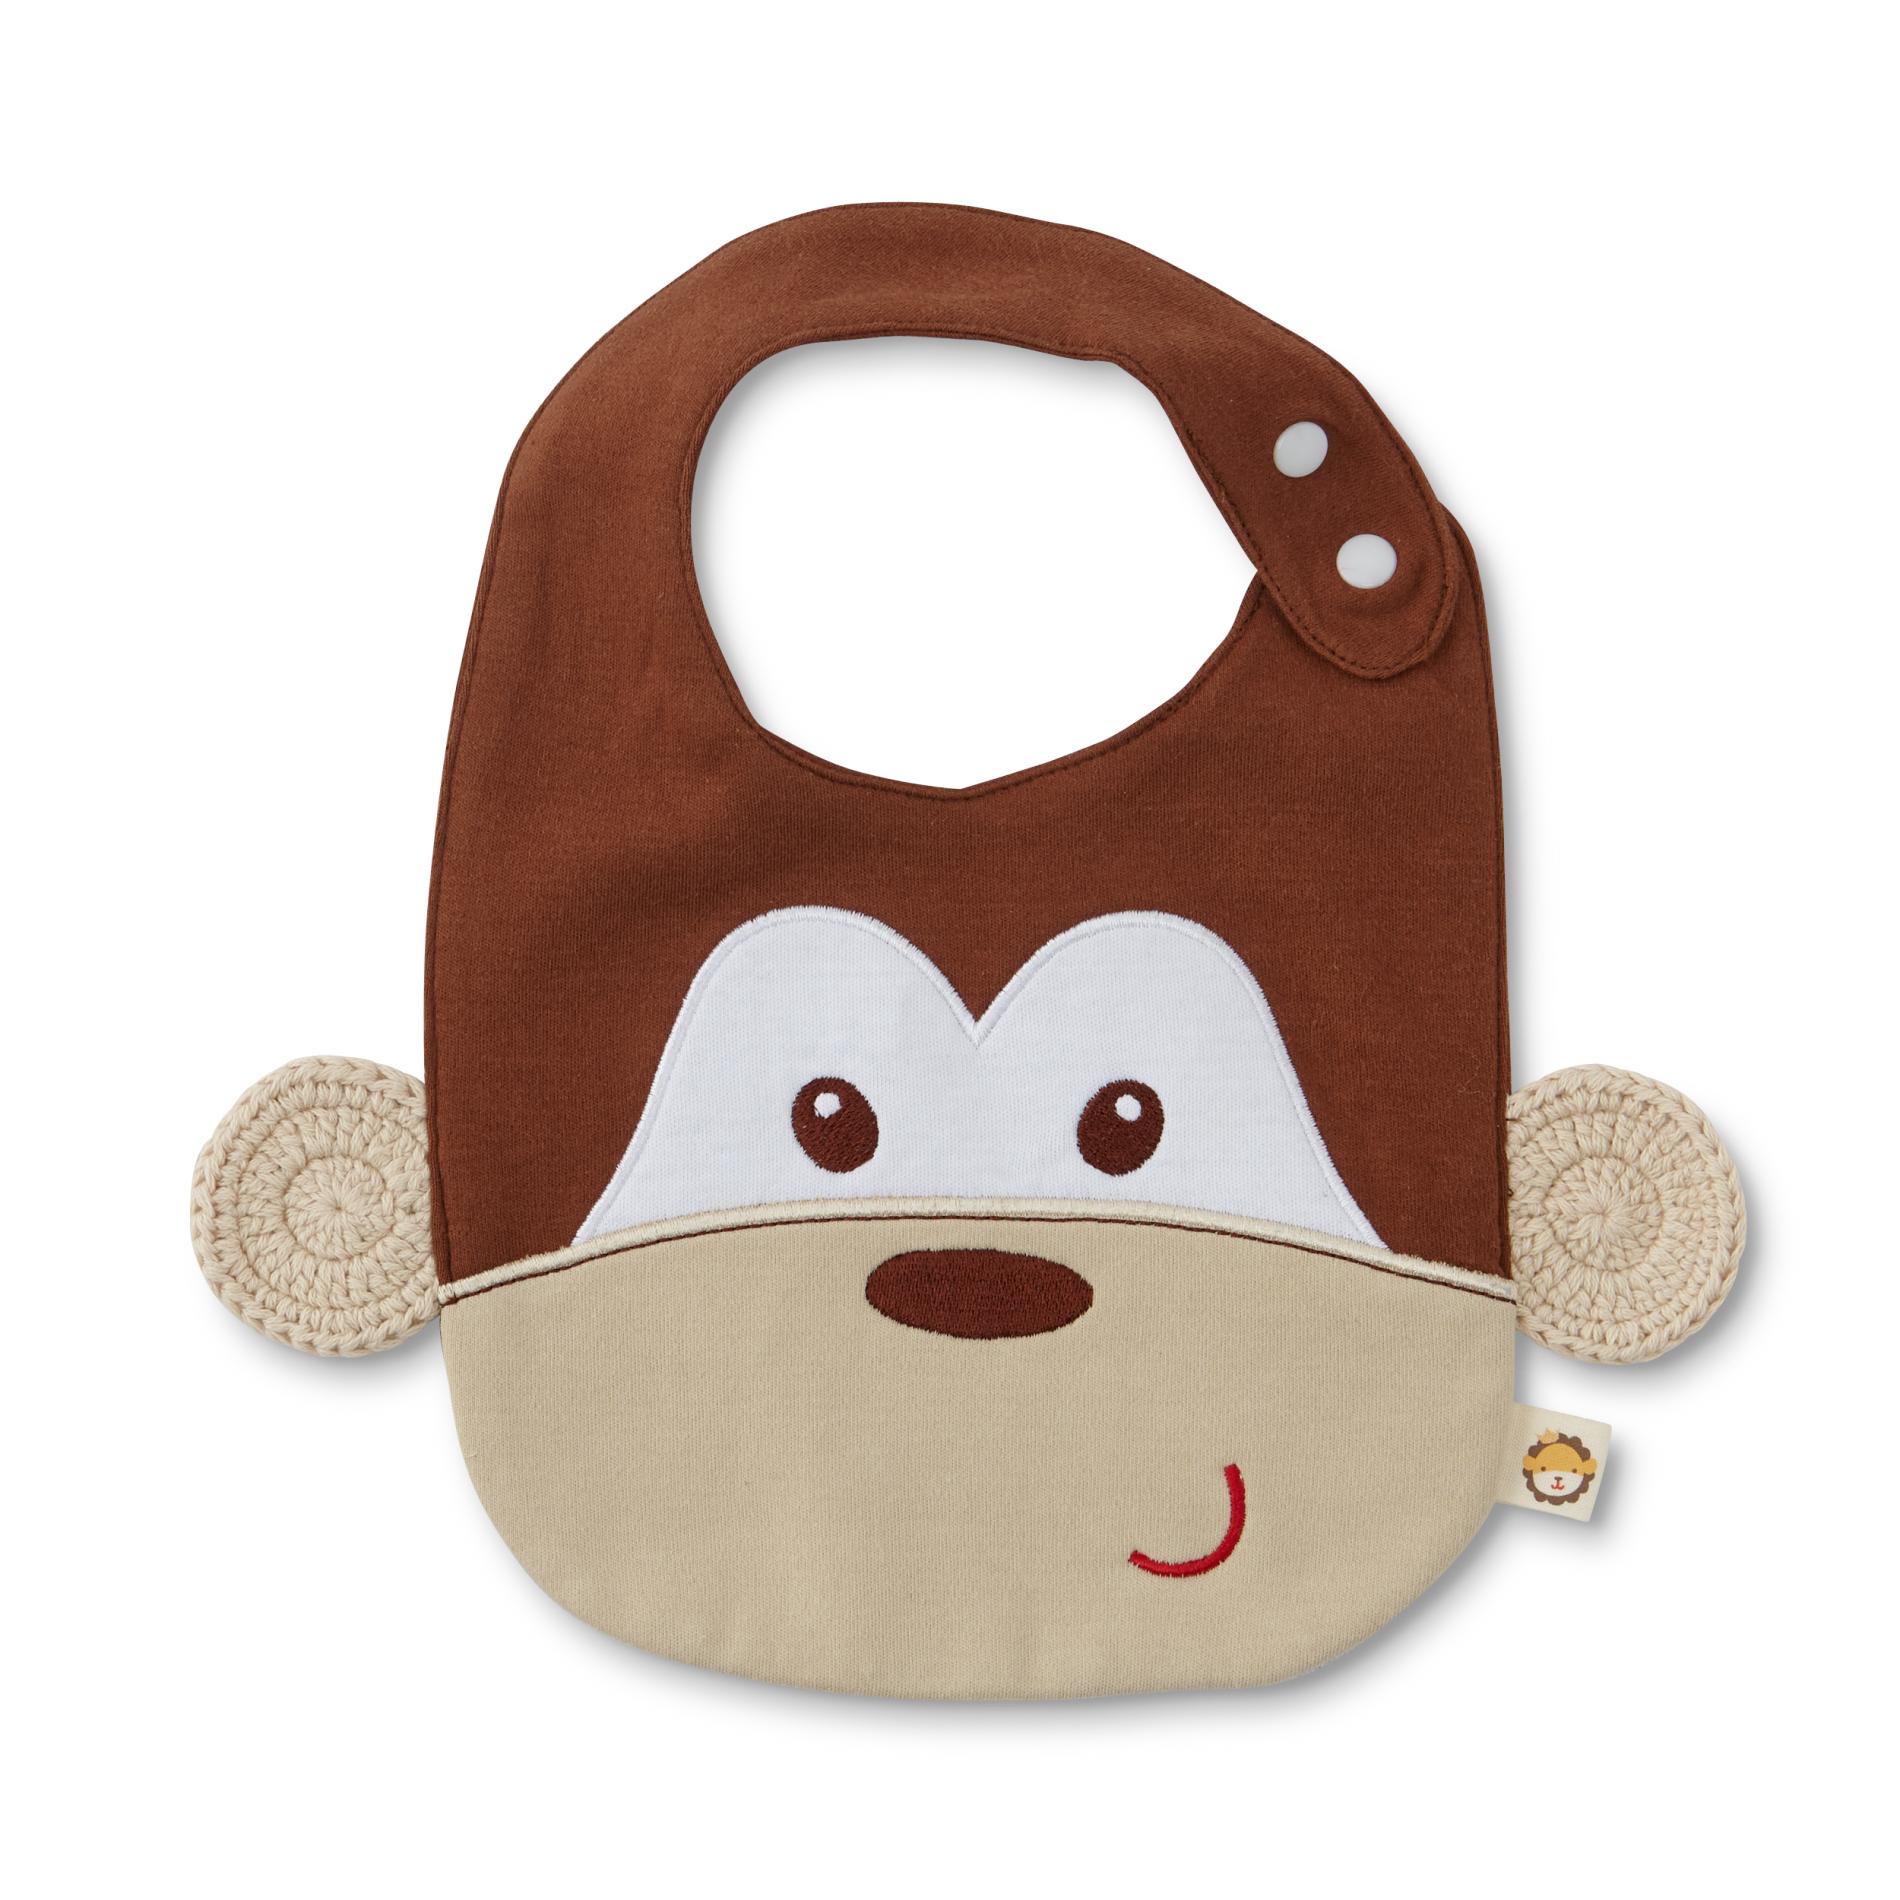 Infants' Bib - Monkey